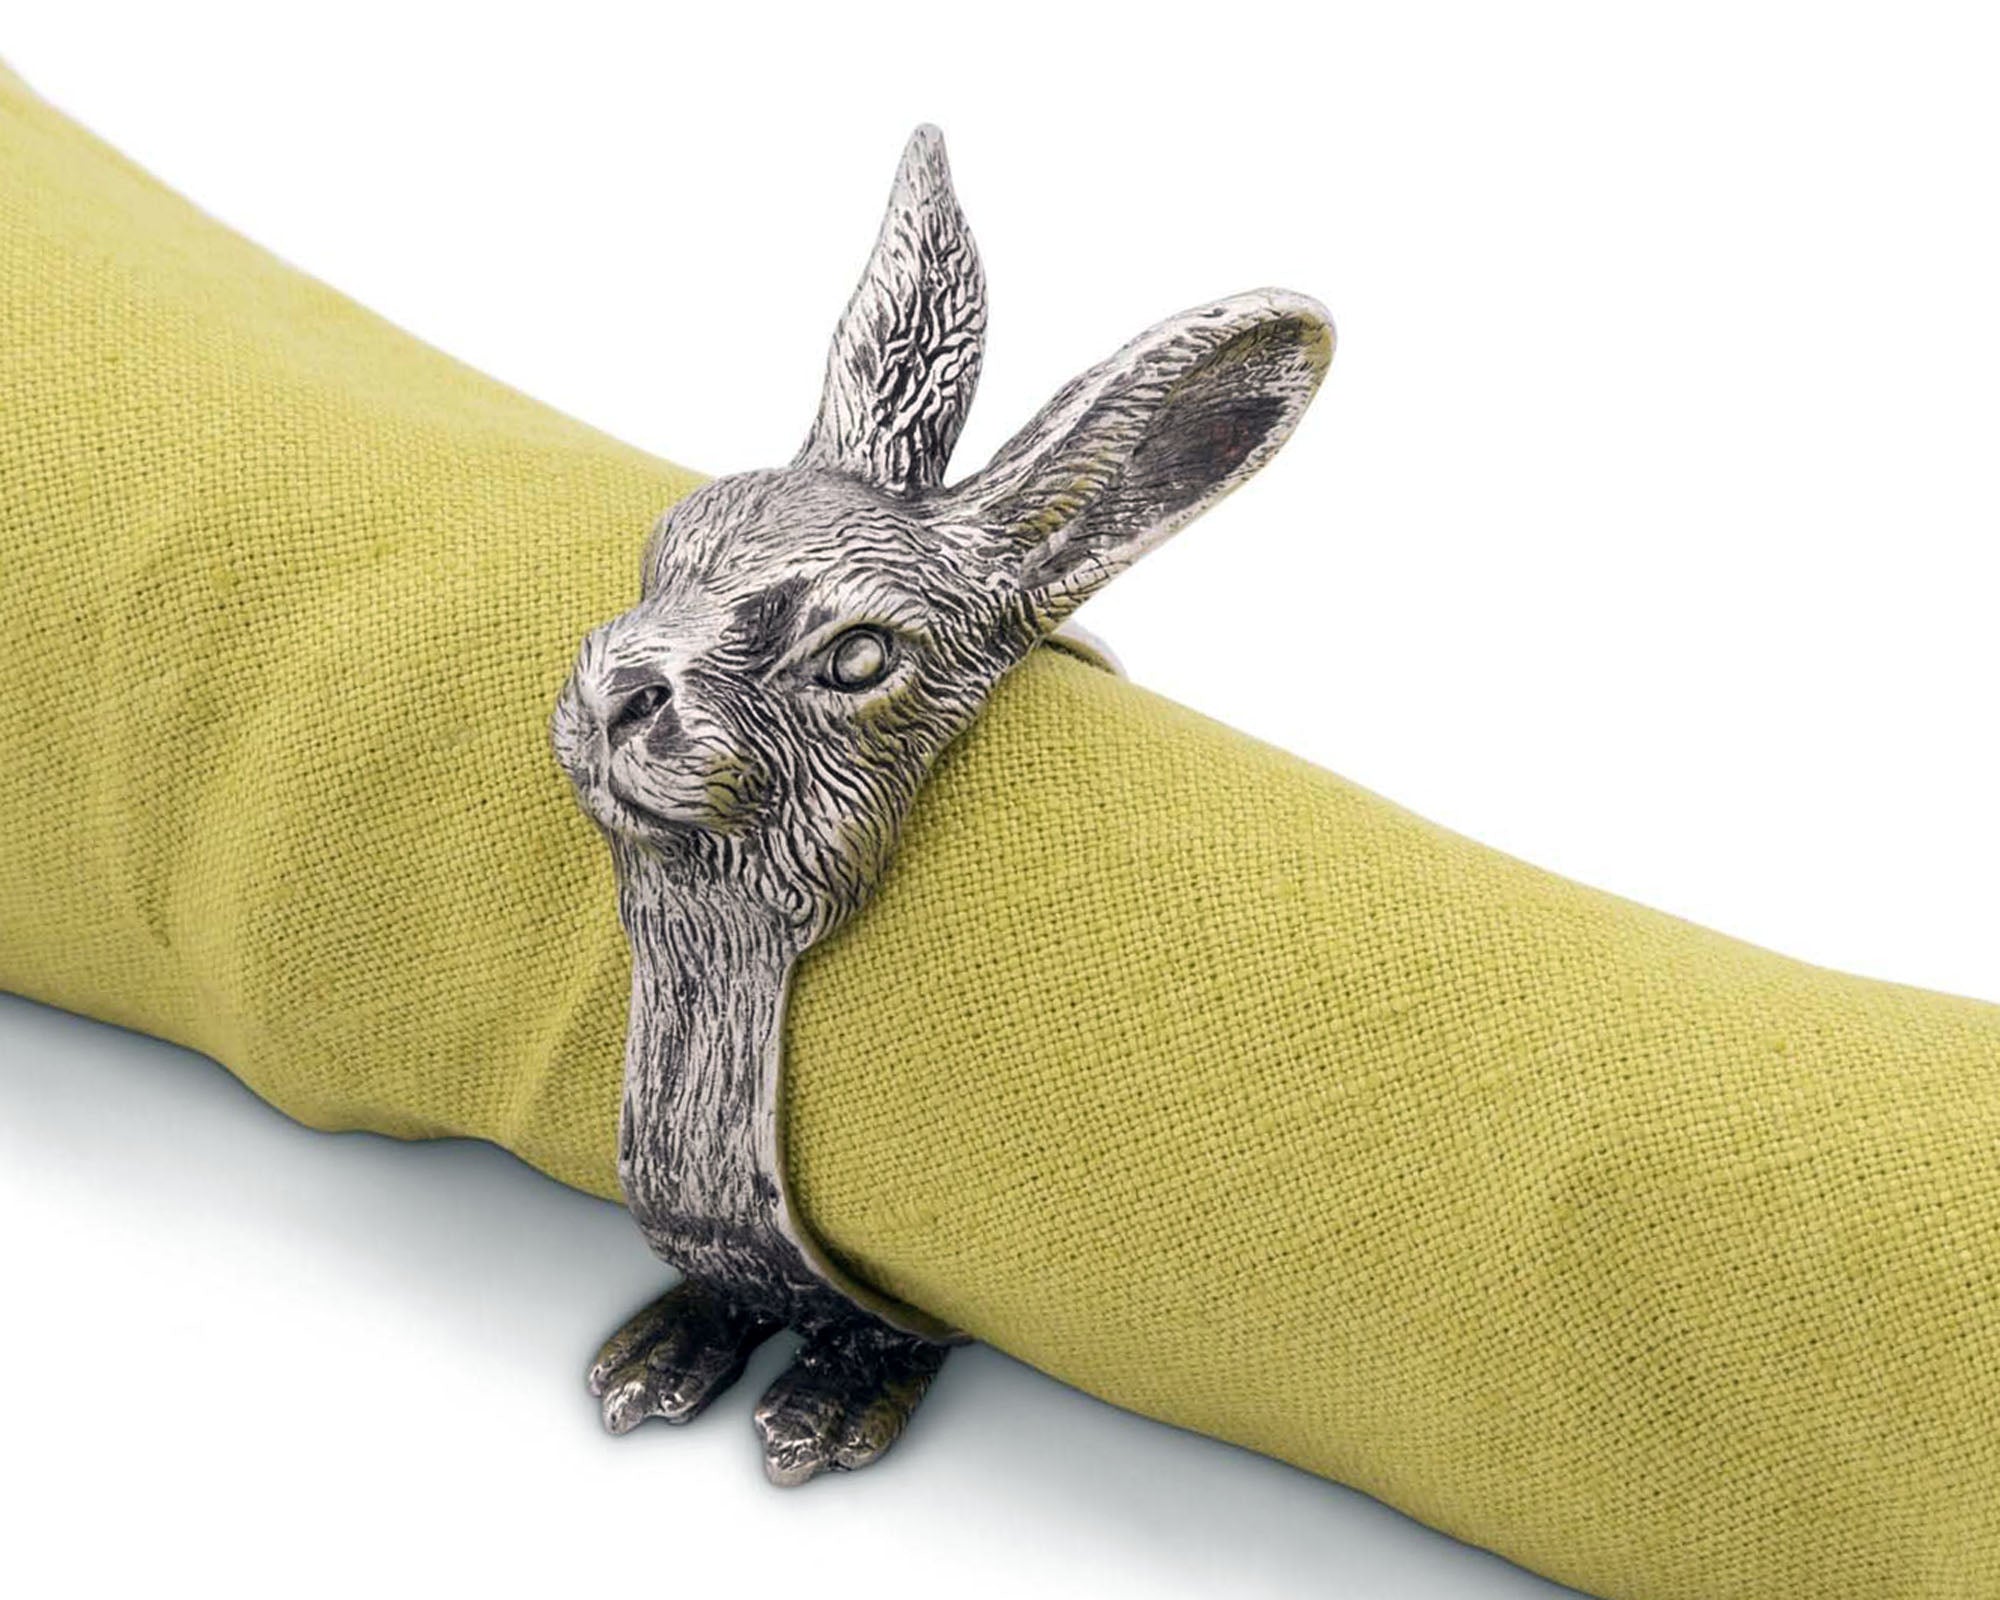 Vagabond House Rabbit Napkin Rings Product Image